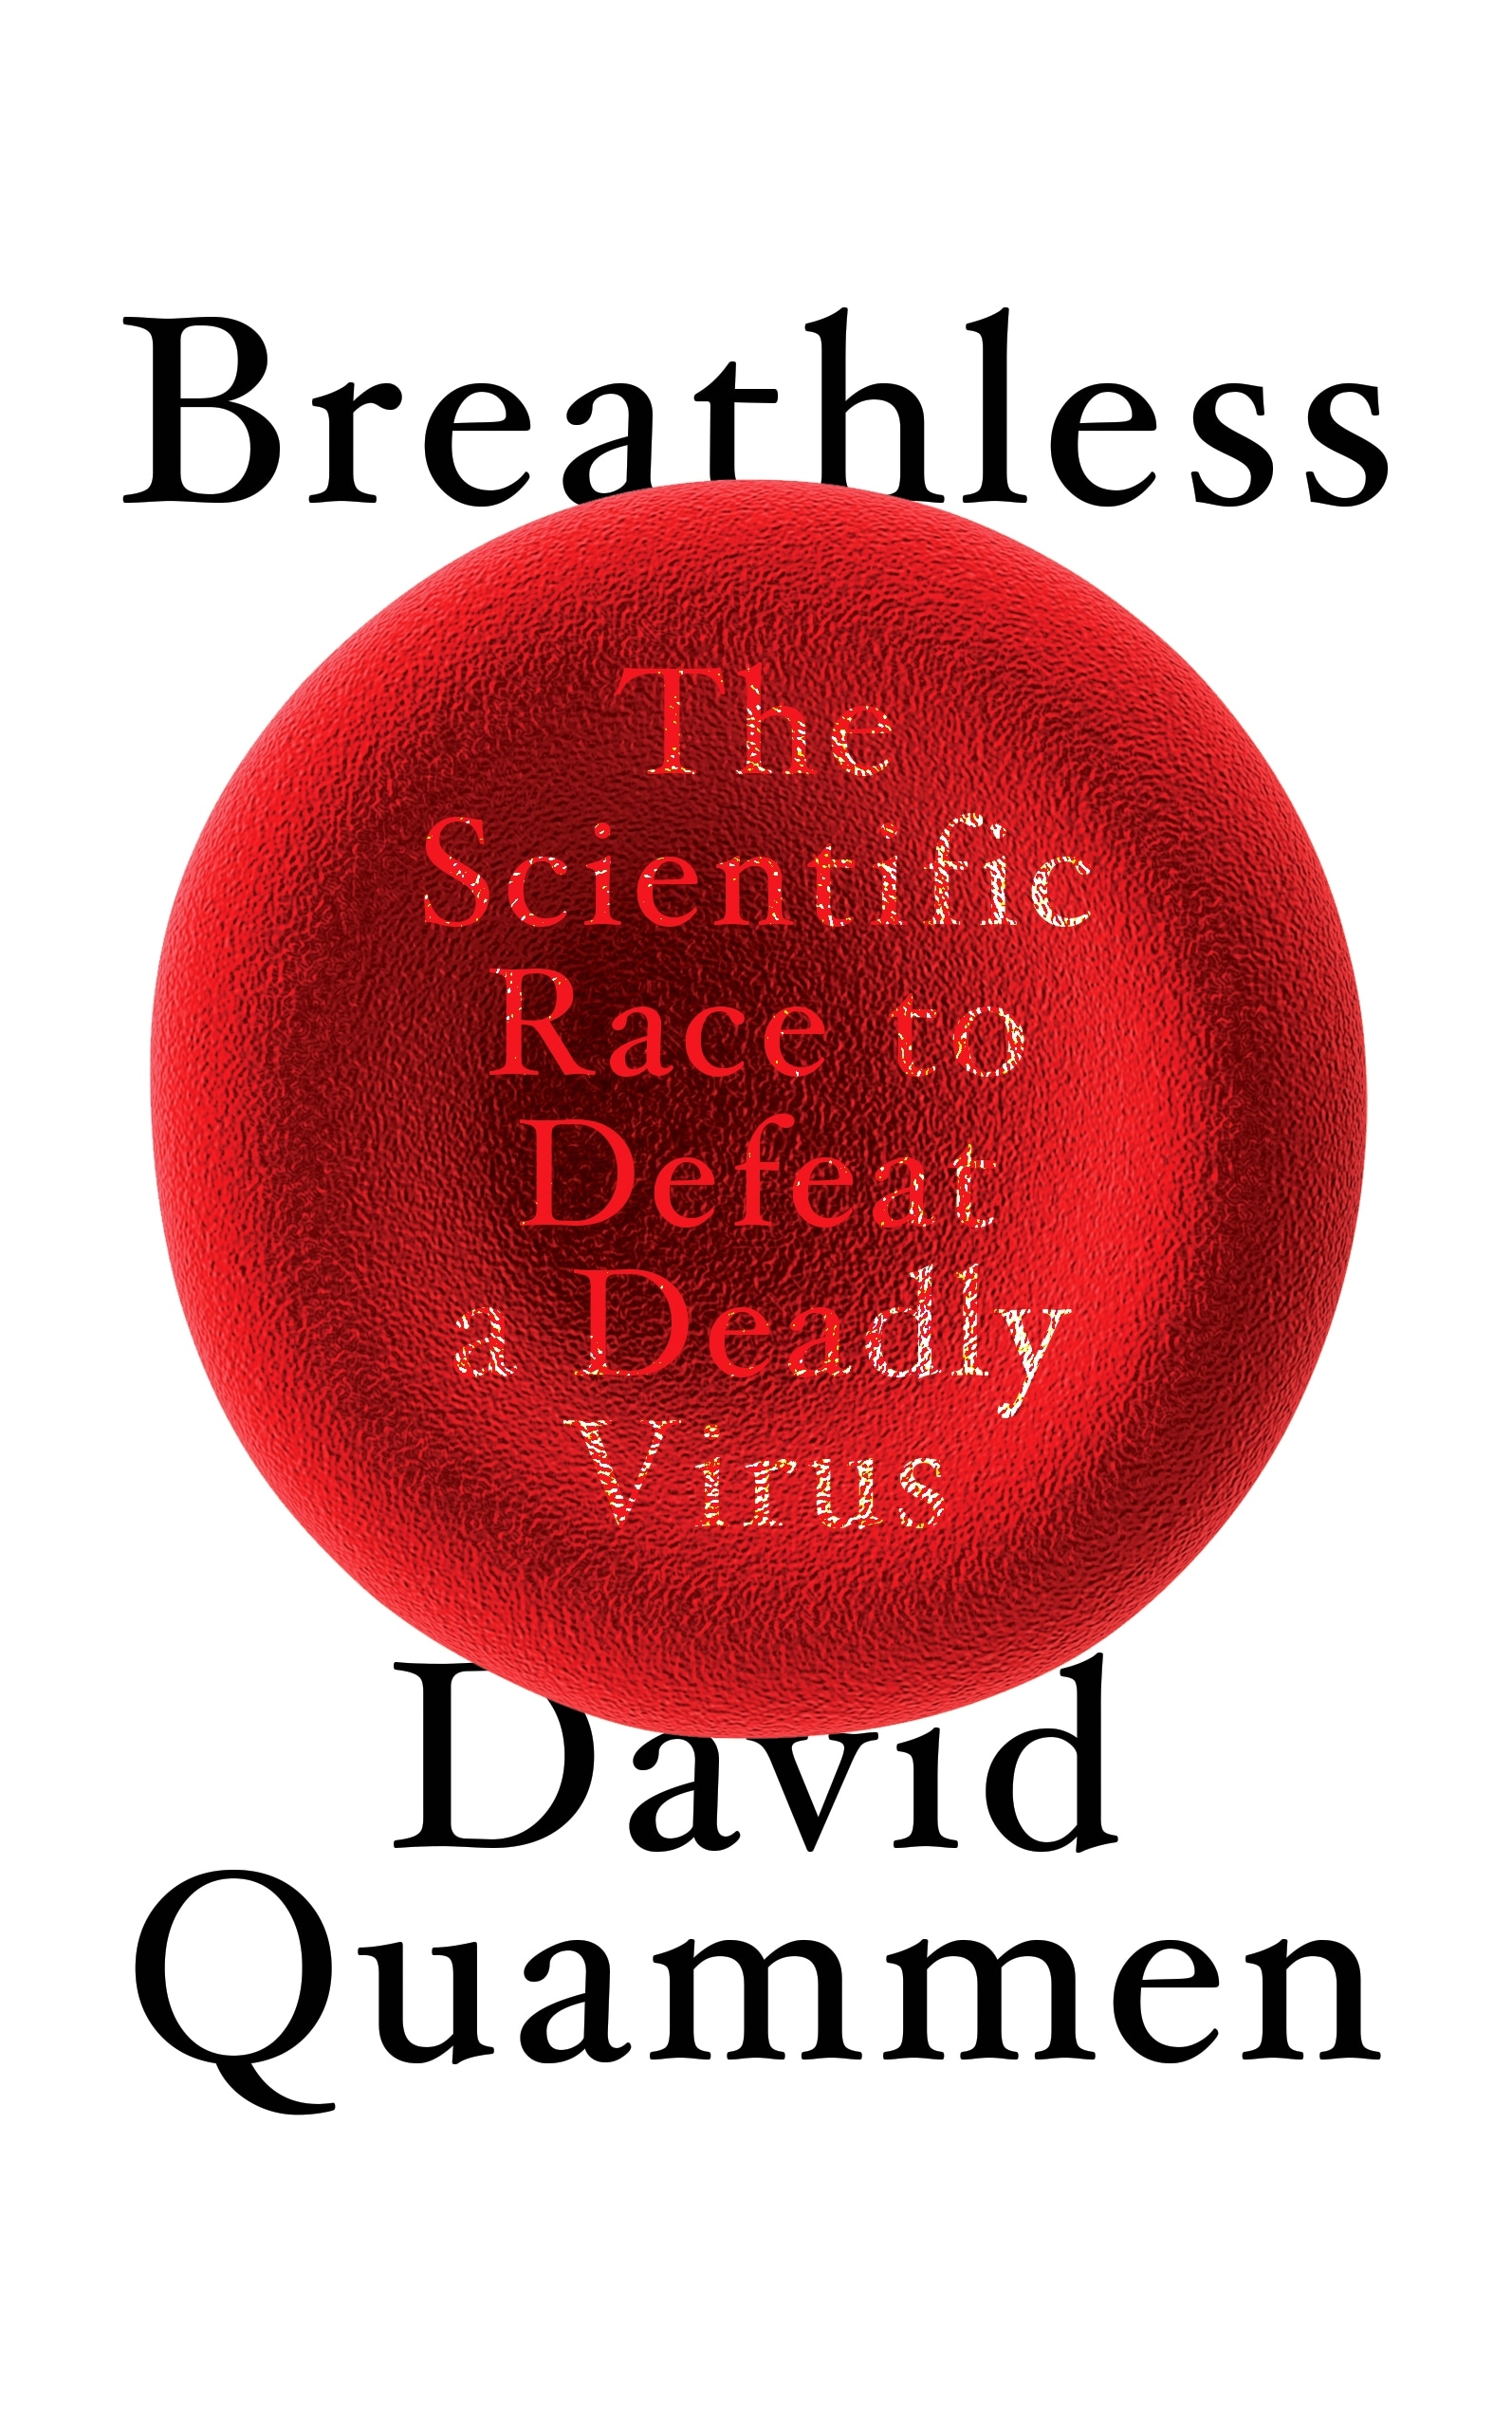 Book “Breathless” by David Quammen — October 6, 2022